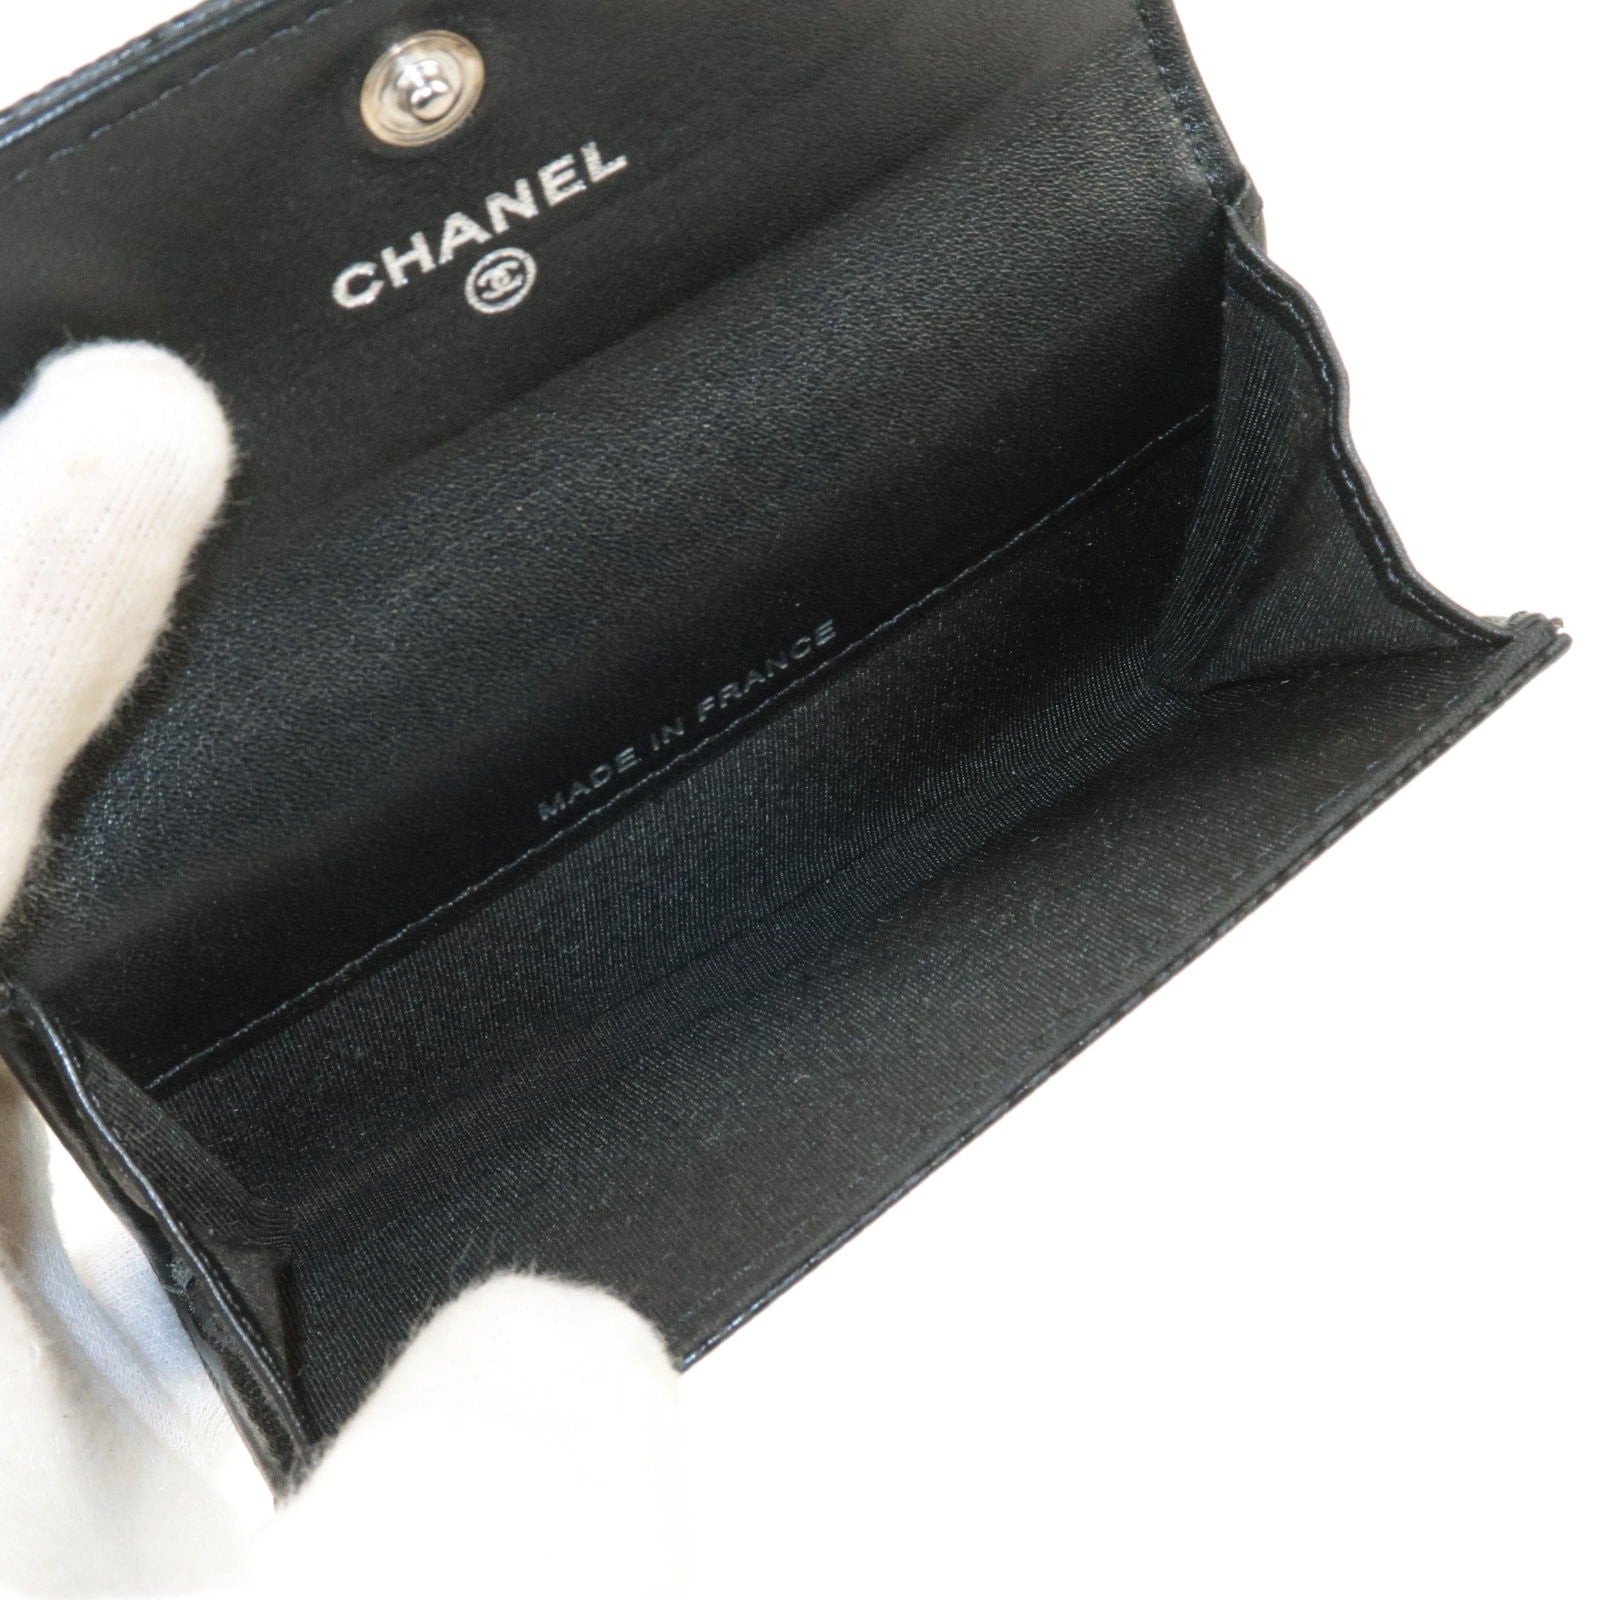 CHANEL-COCO-Mark-Caviar-Skin-Card-Case-Card-Holder-Black-A50074